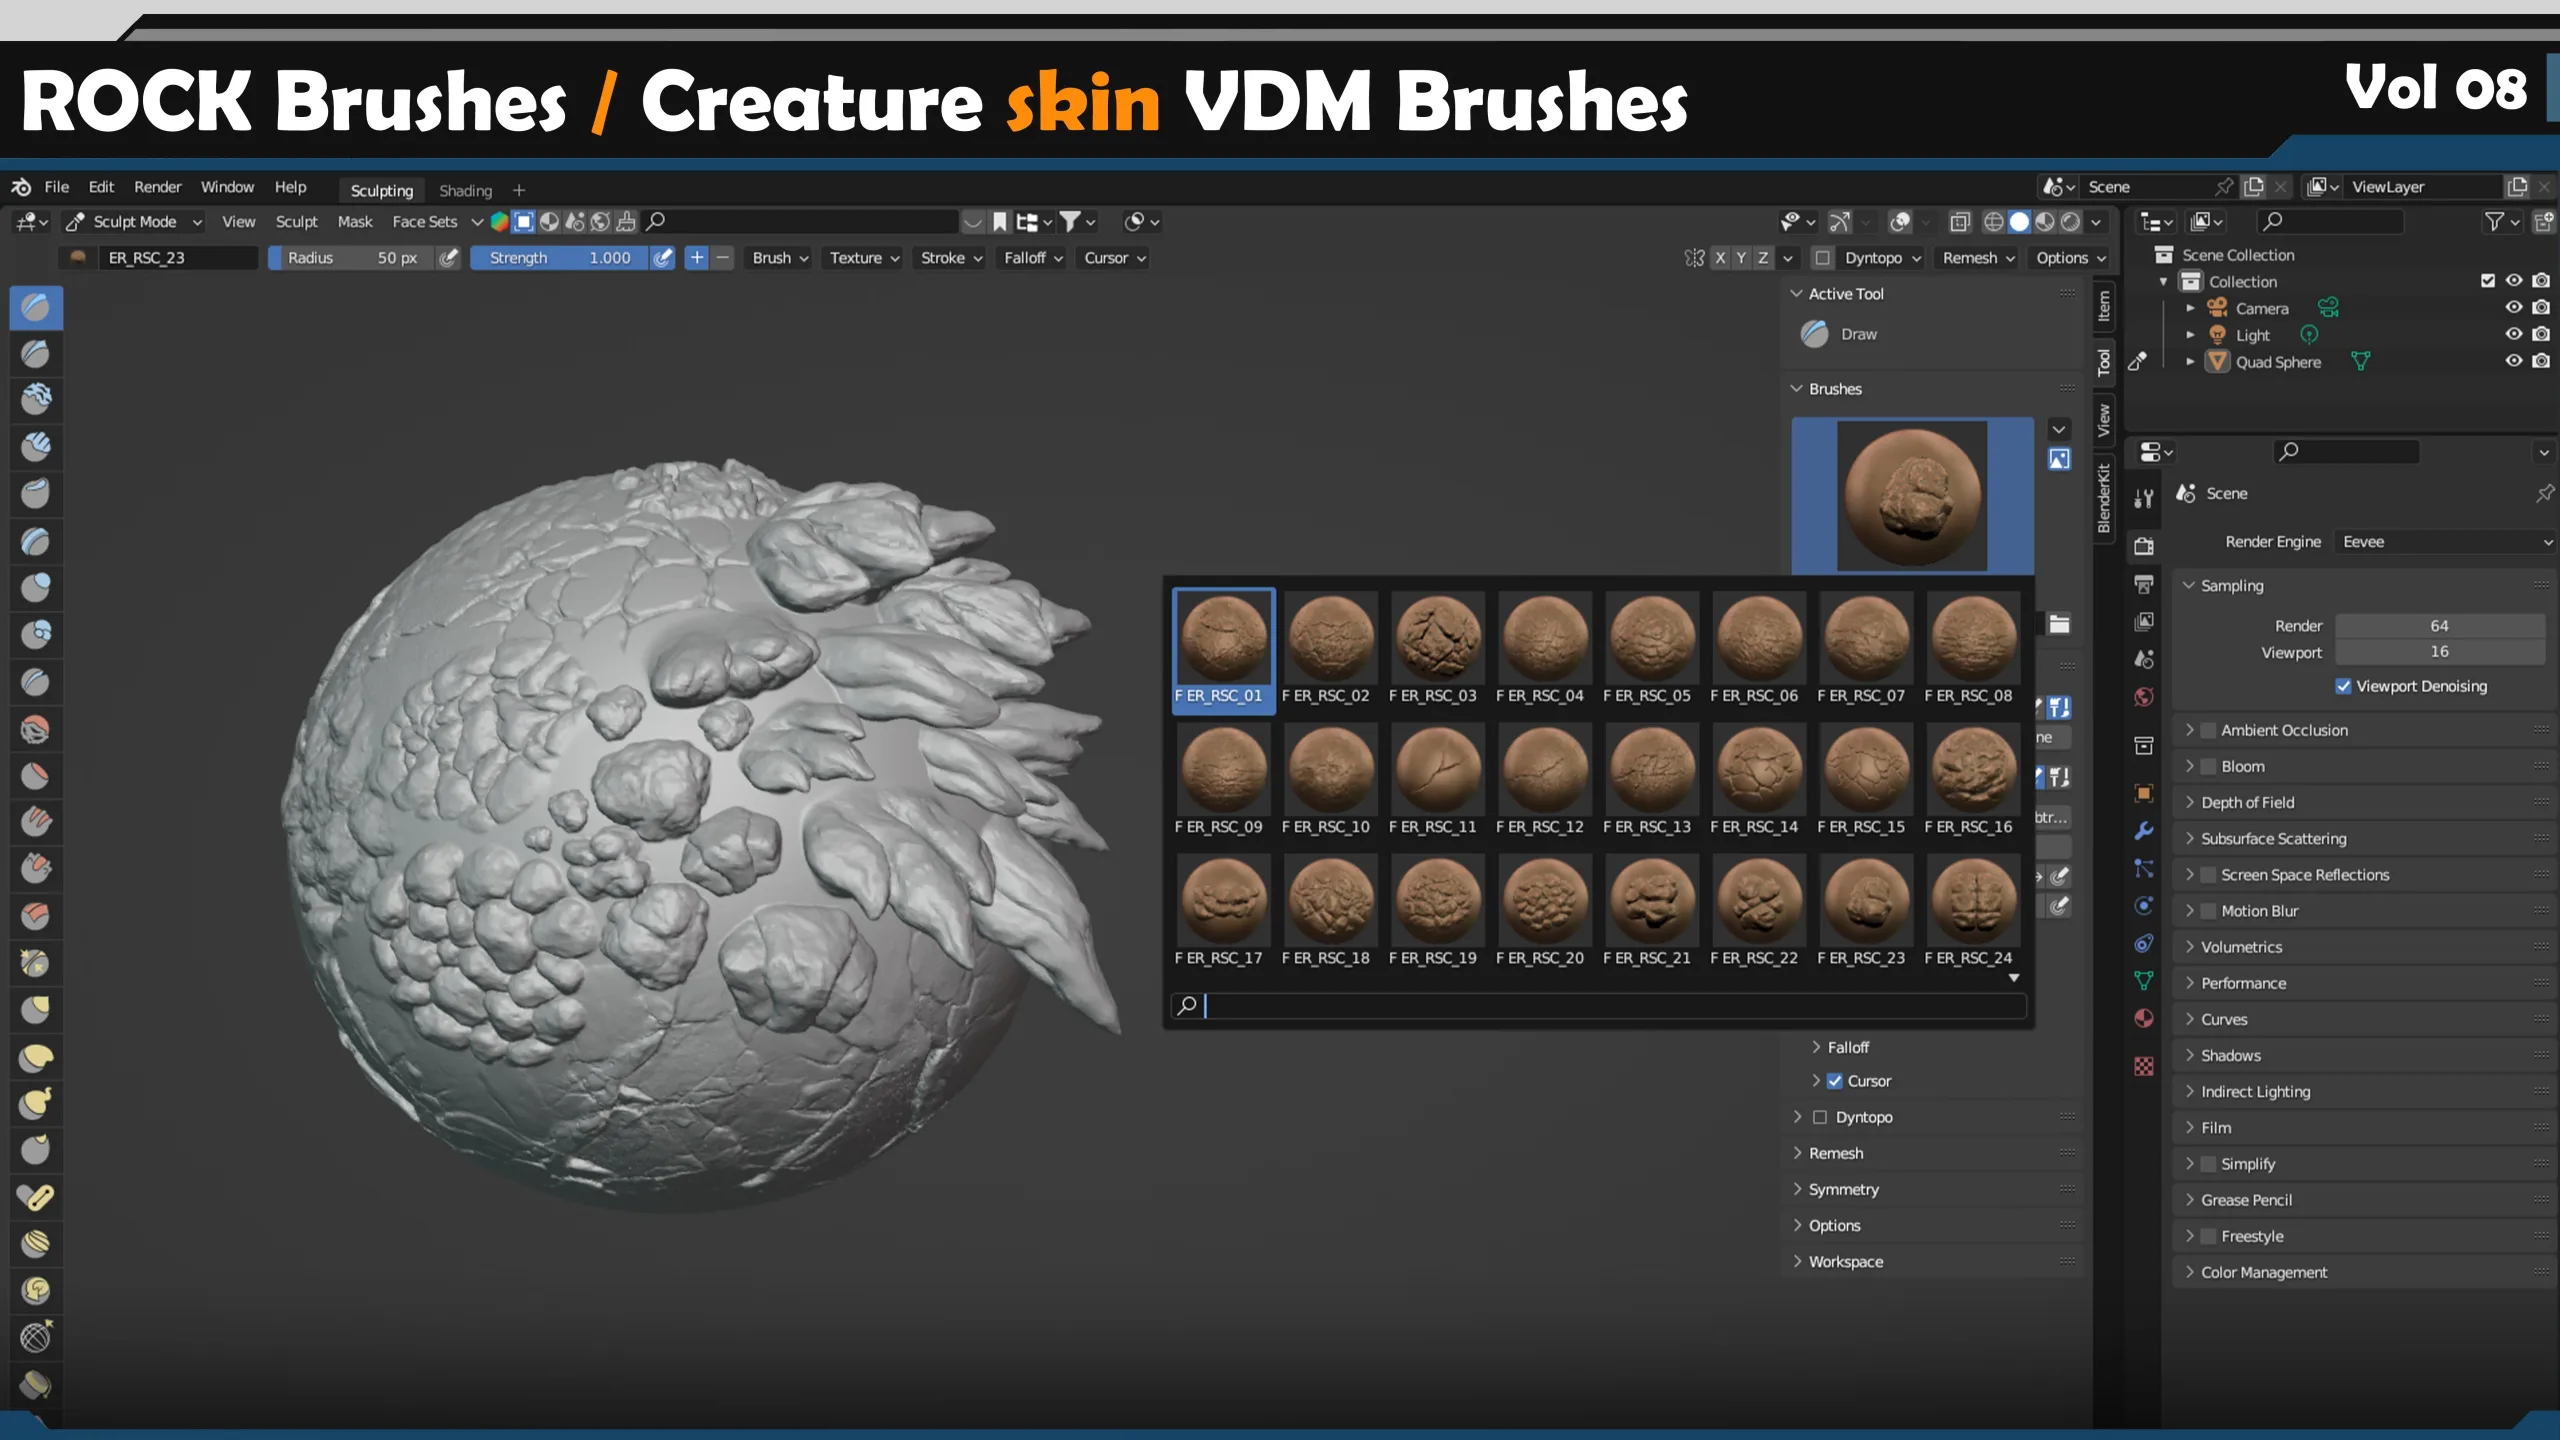 ROCK Brushes / Creature skin VDM Brushes  Vol 08